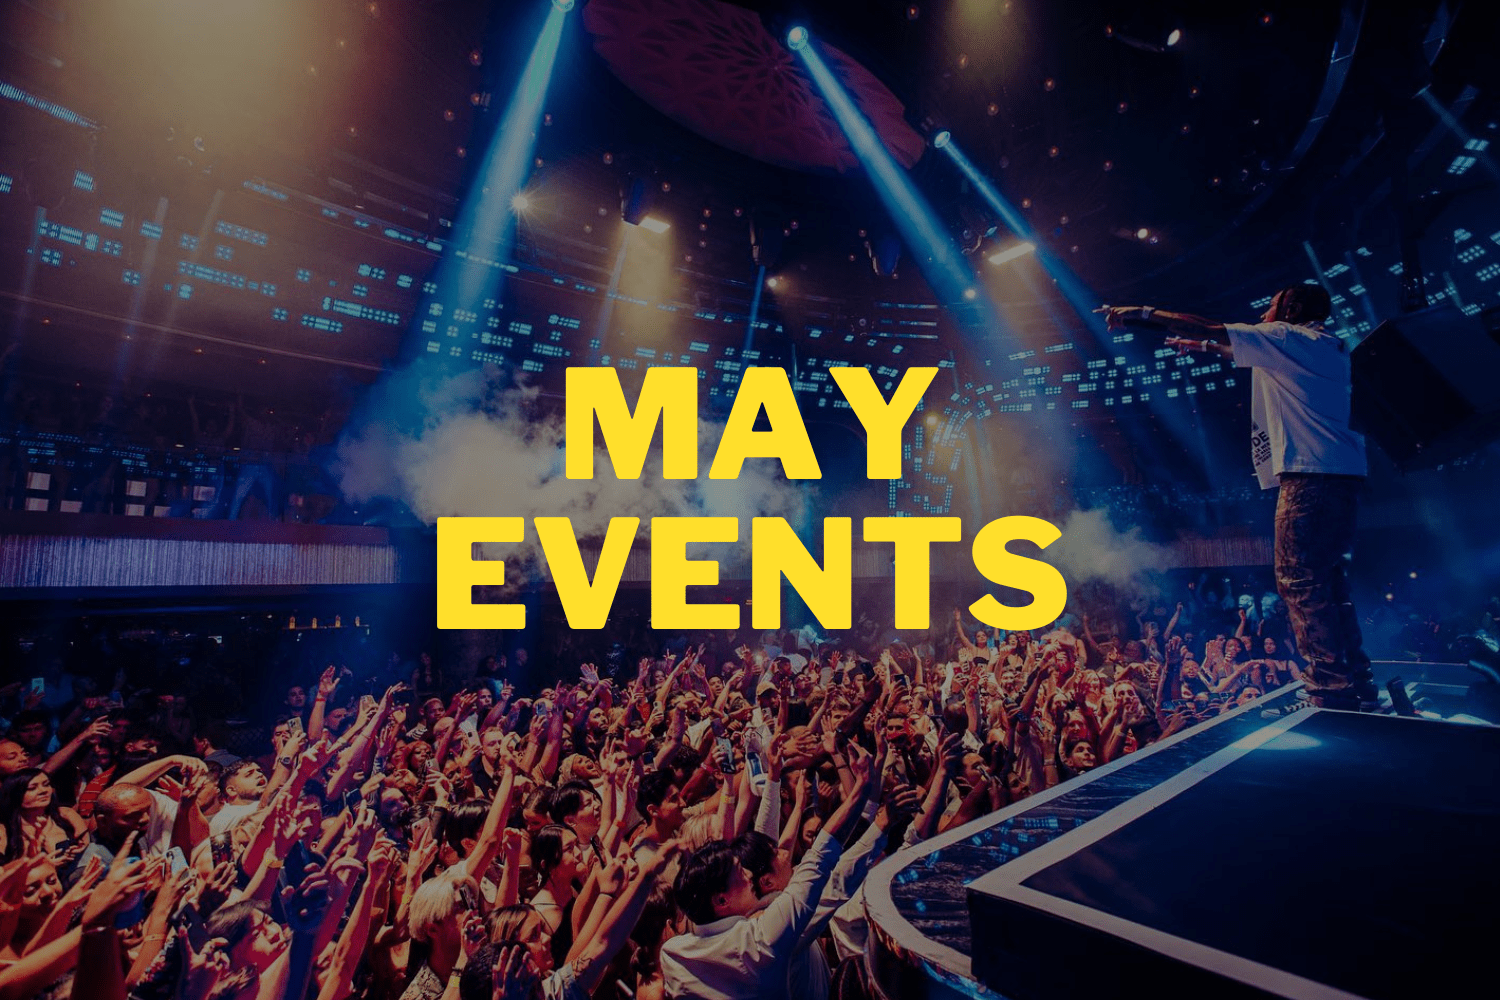 Las Vegas Club Events may